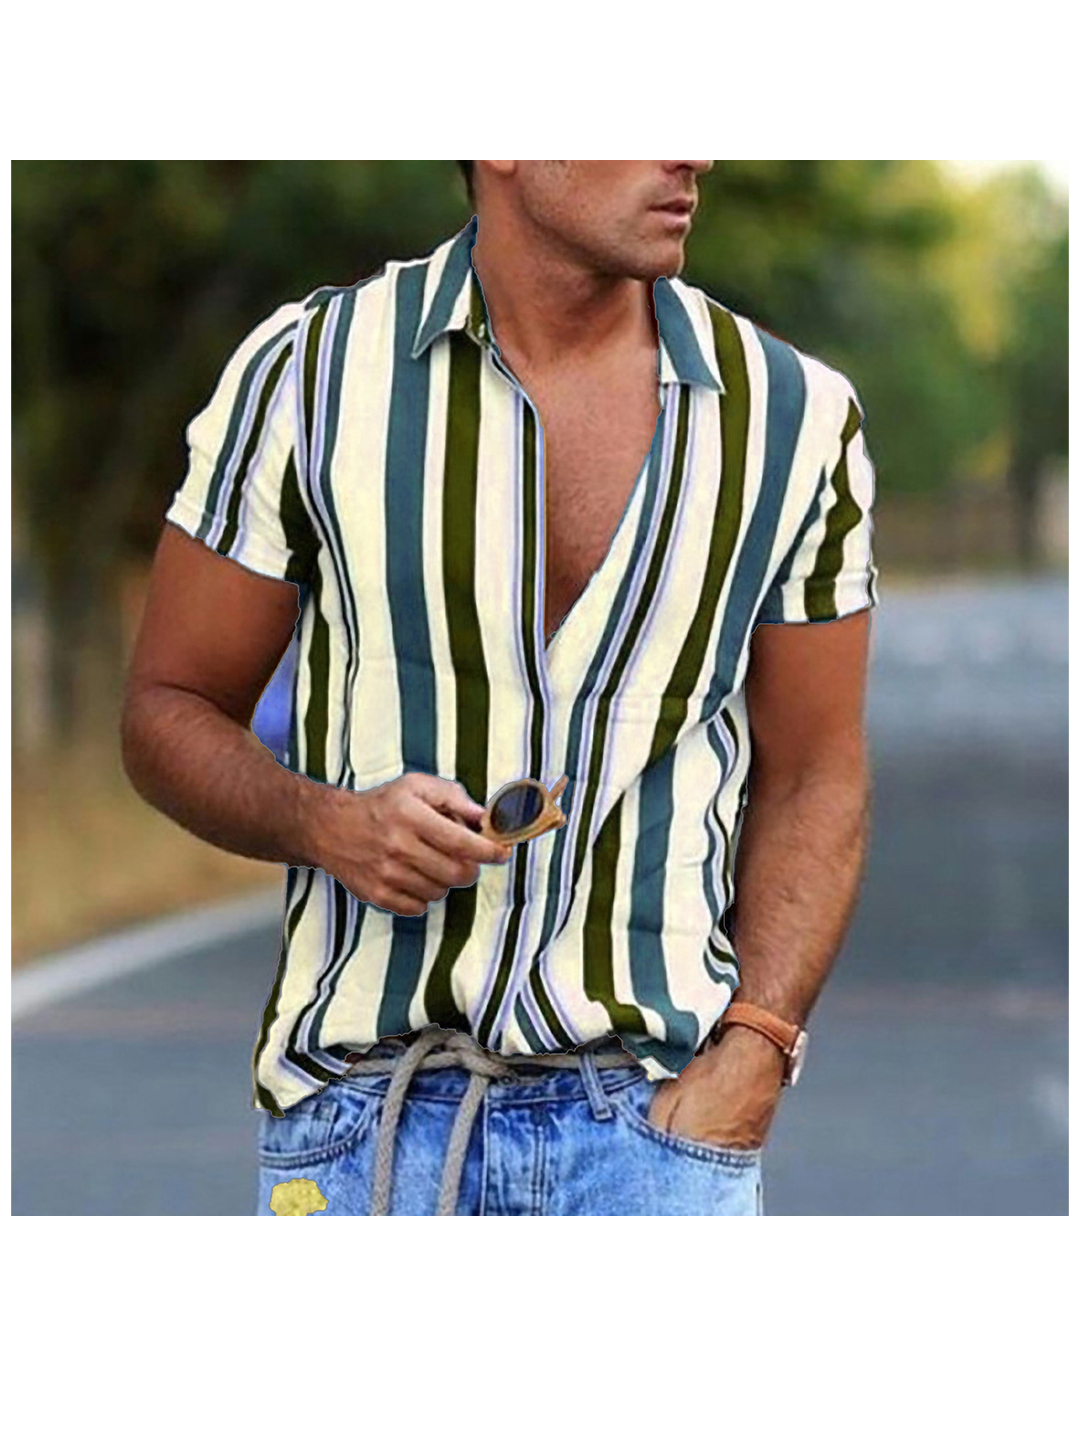 Men's Mullins Multicolored Striped Print Short Sleeve Shirt-poisonstreetwear.com